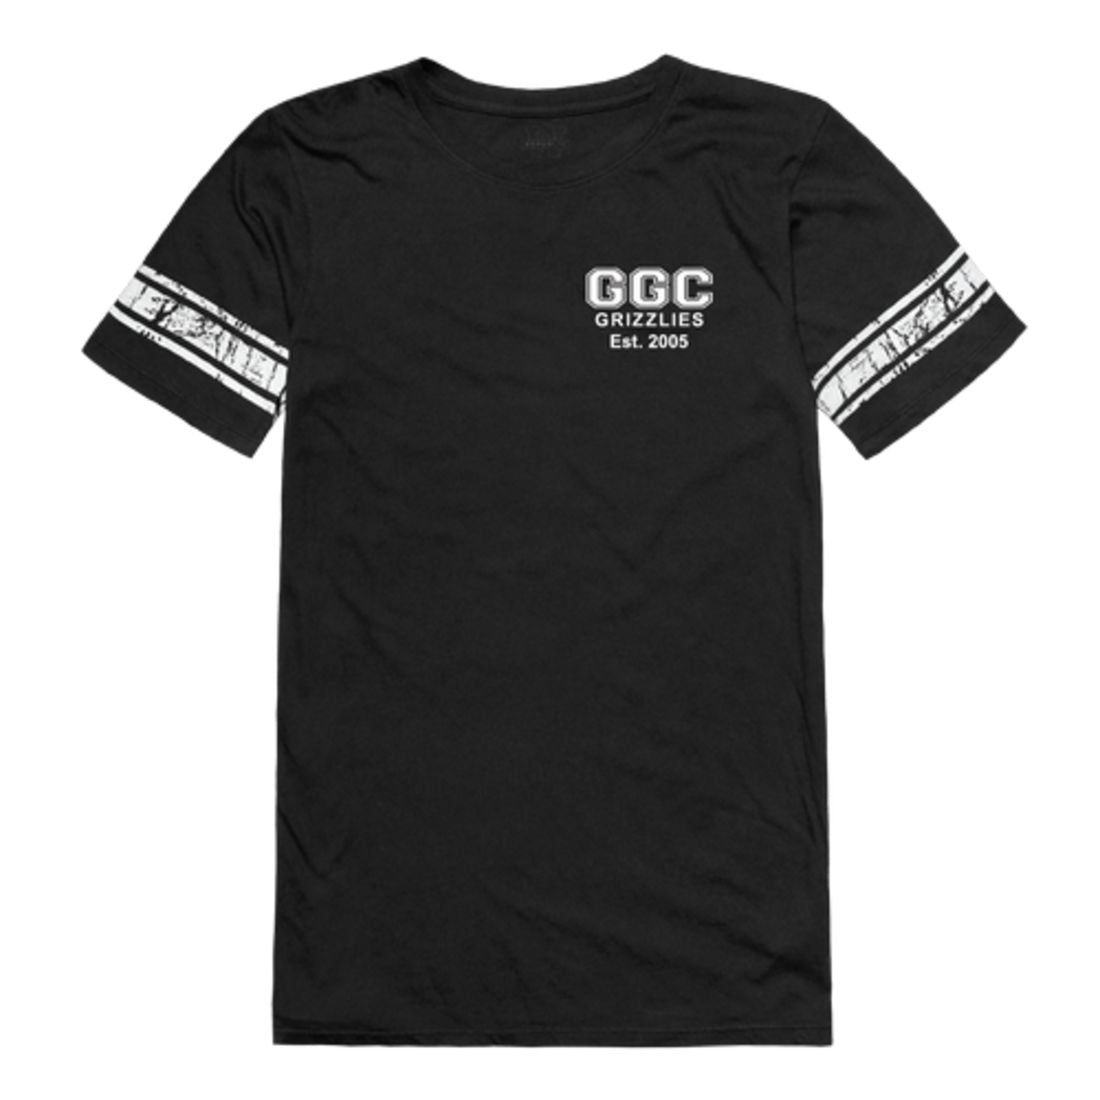 Georgia Gwinnett College Grizzlies Womens Practice Football T-Shirt Tee